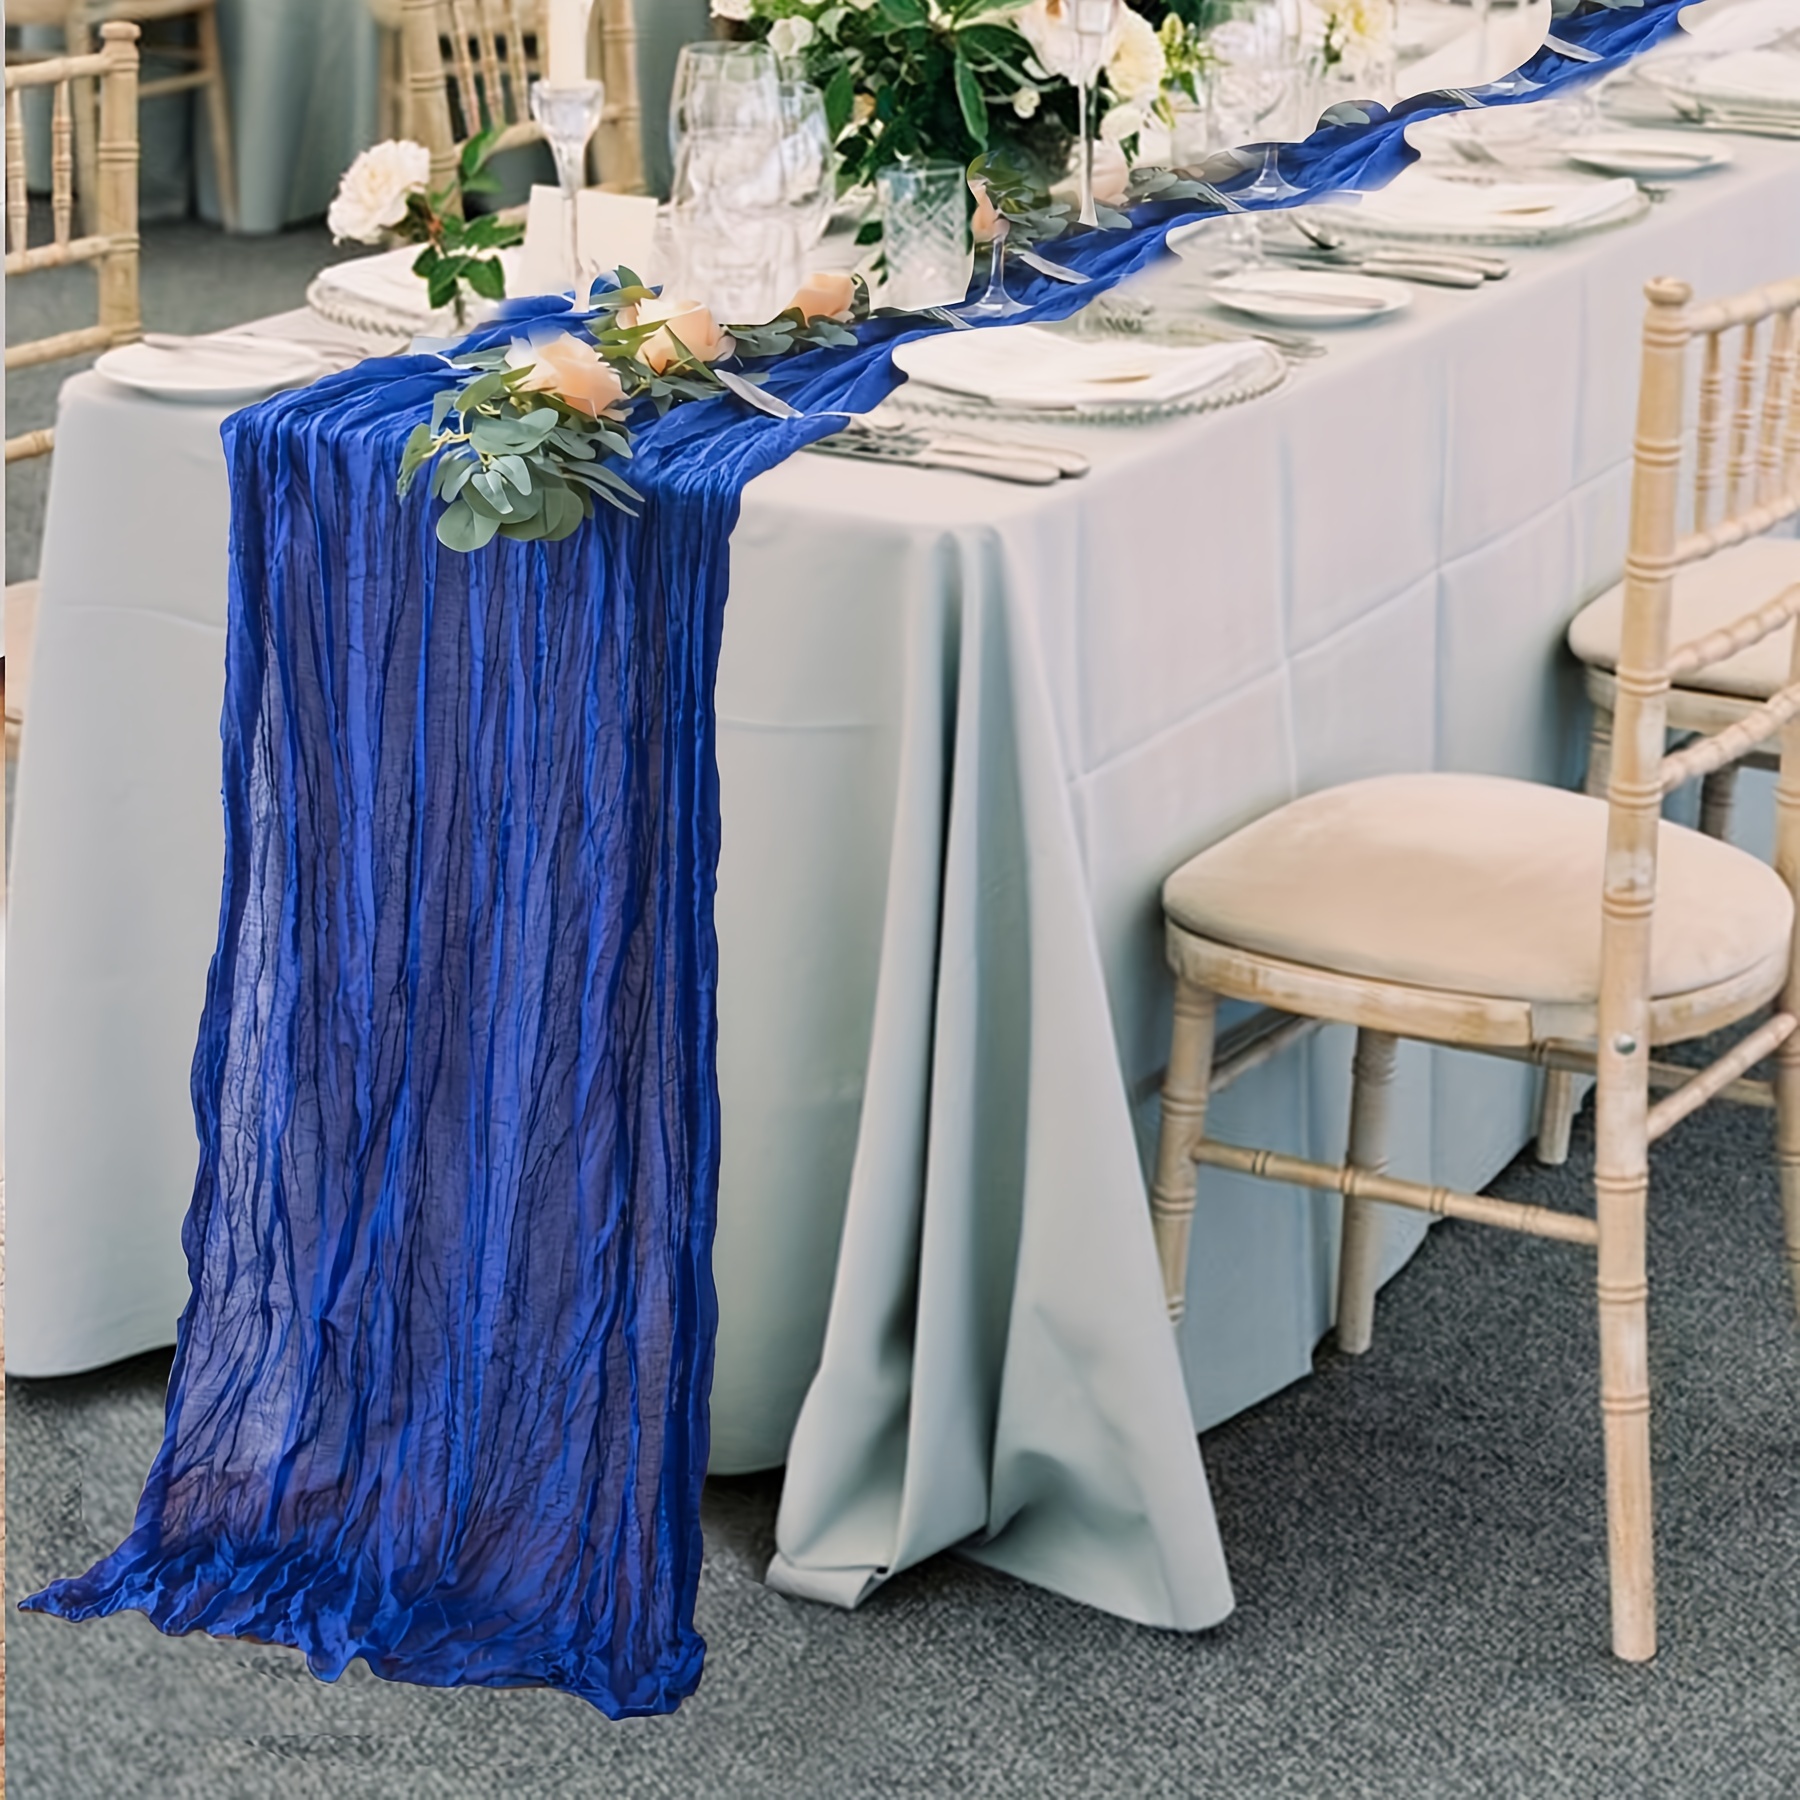 Rustic table decor, Wedding & Party Ideas